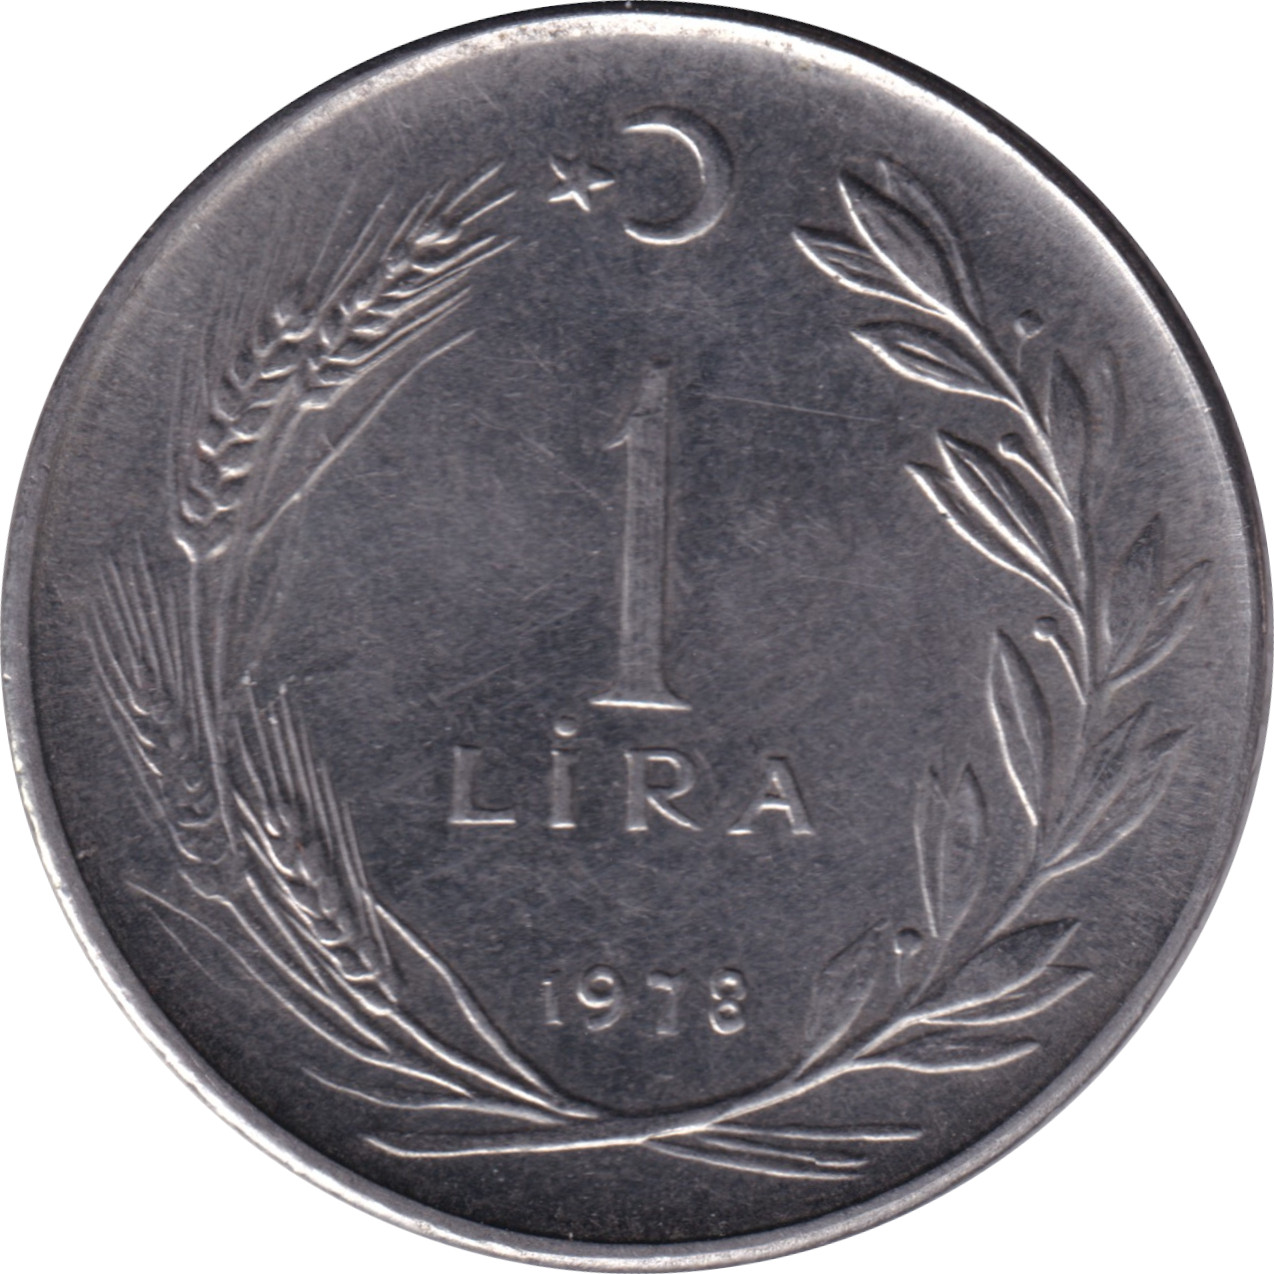 1 lira - Kemal Ataturk • Type 2